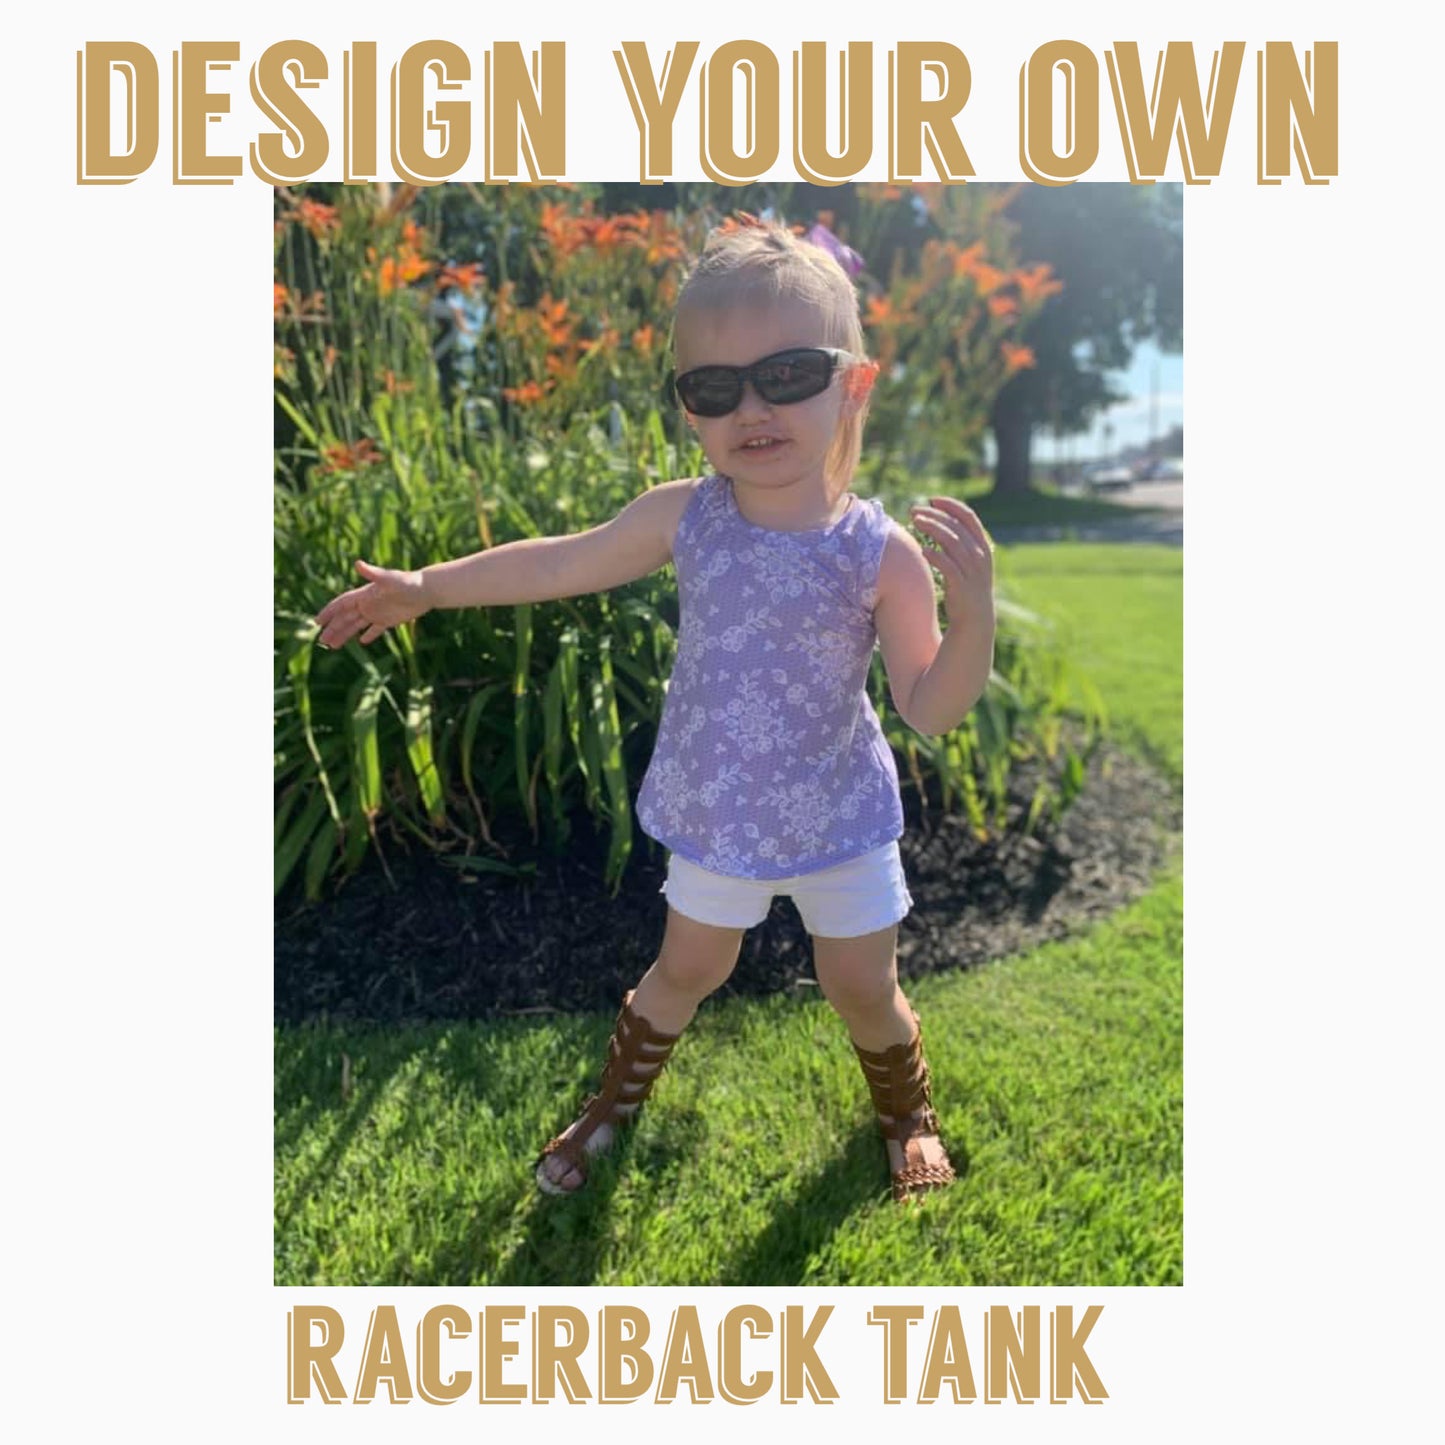 Design Your Own| Racerback tank